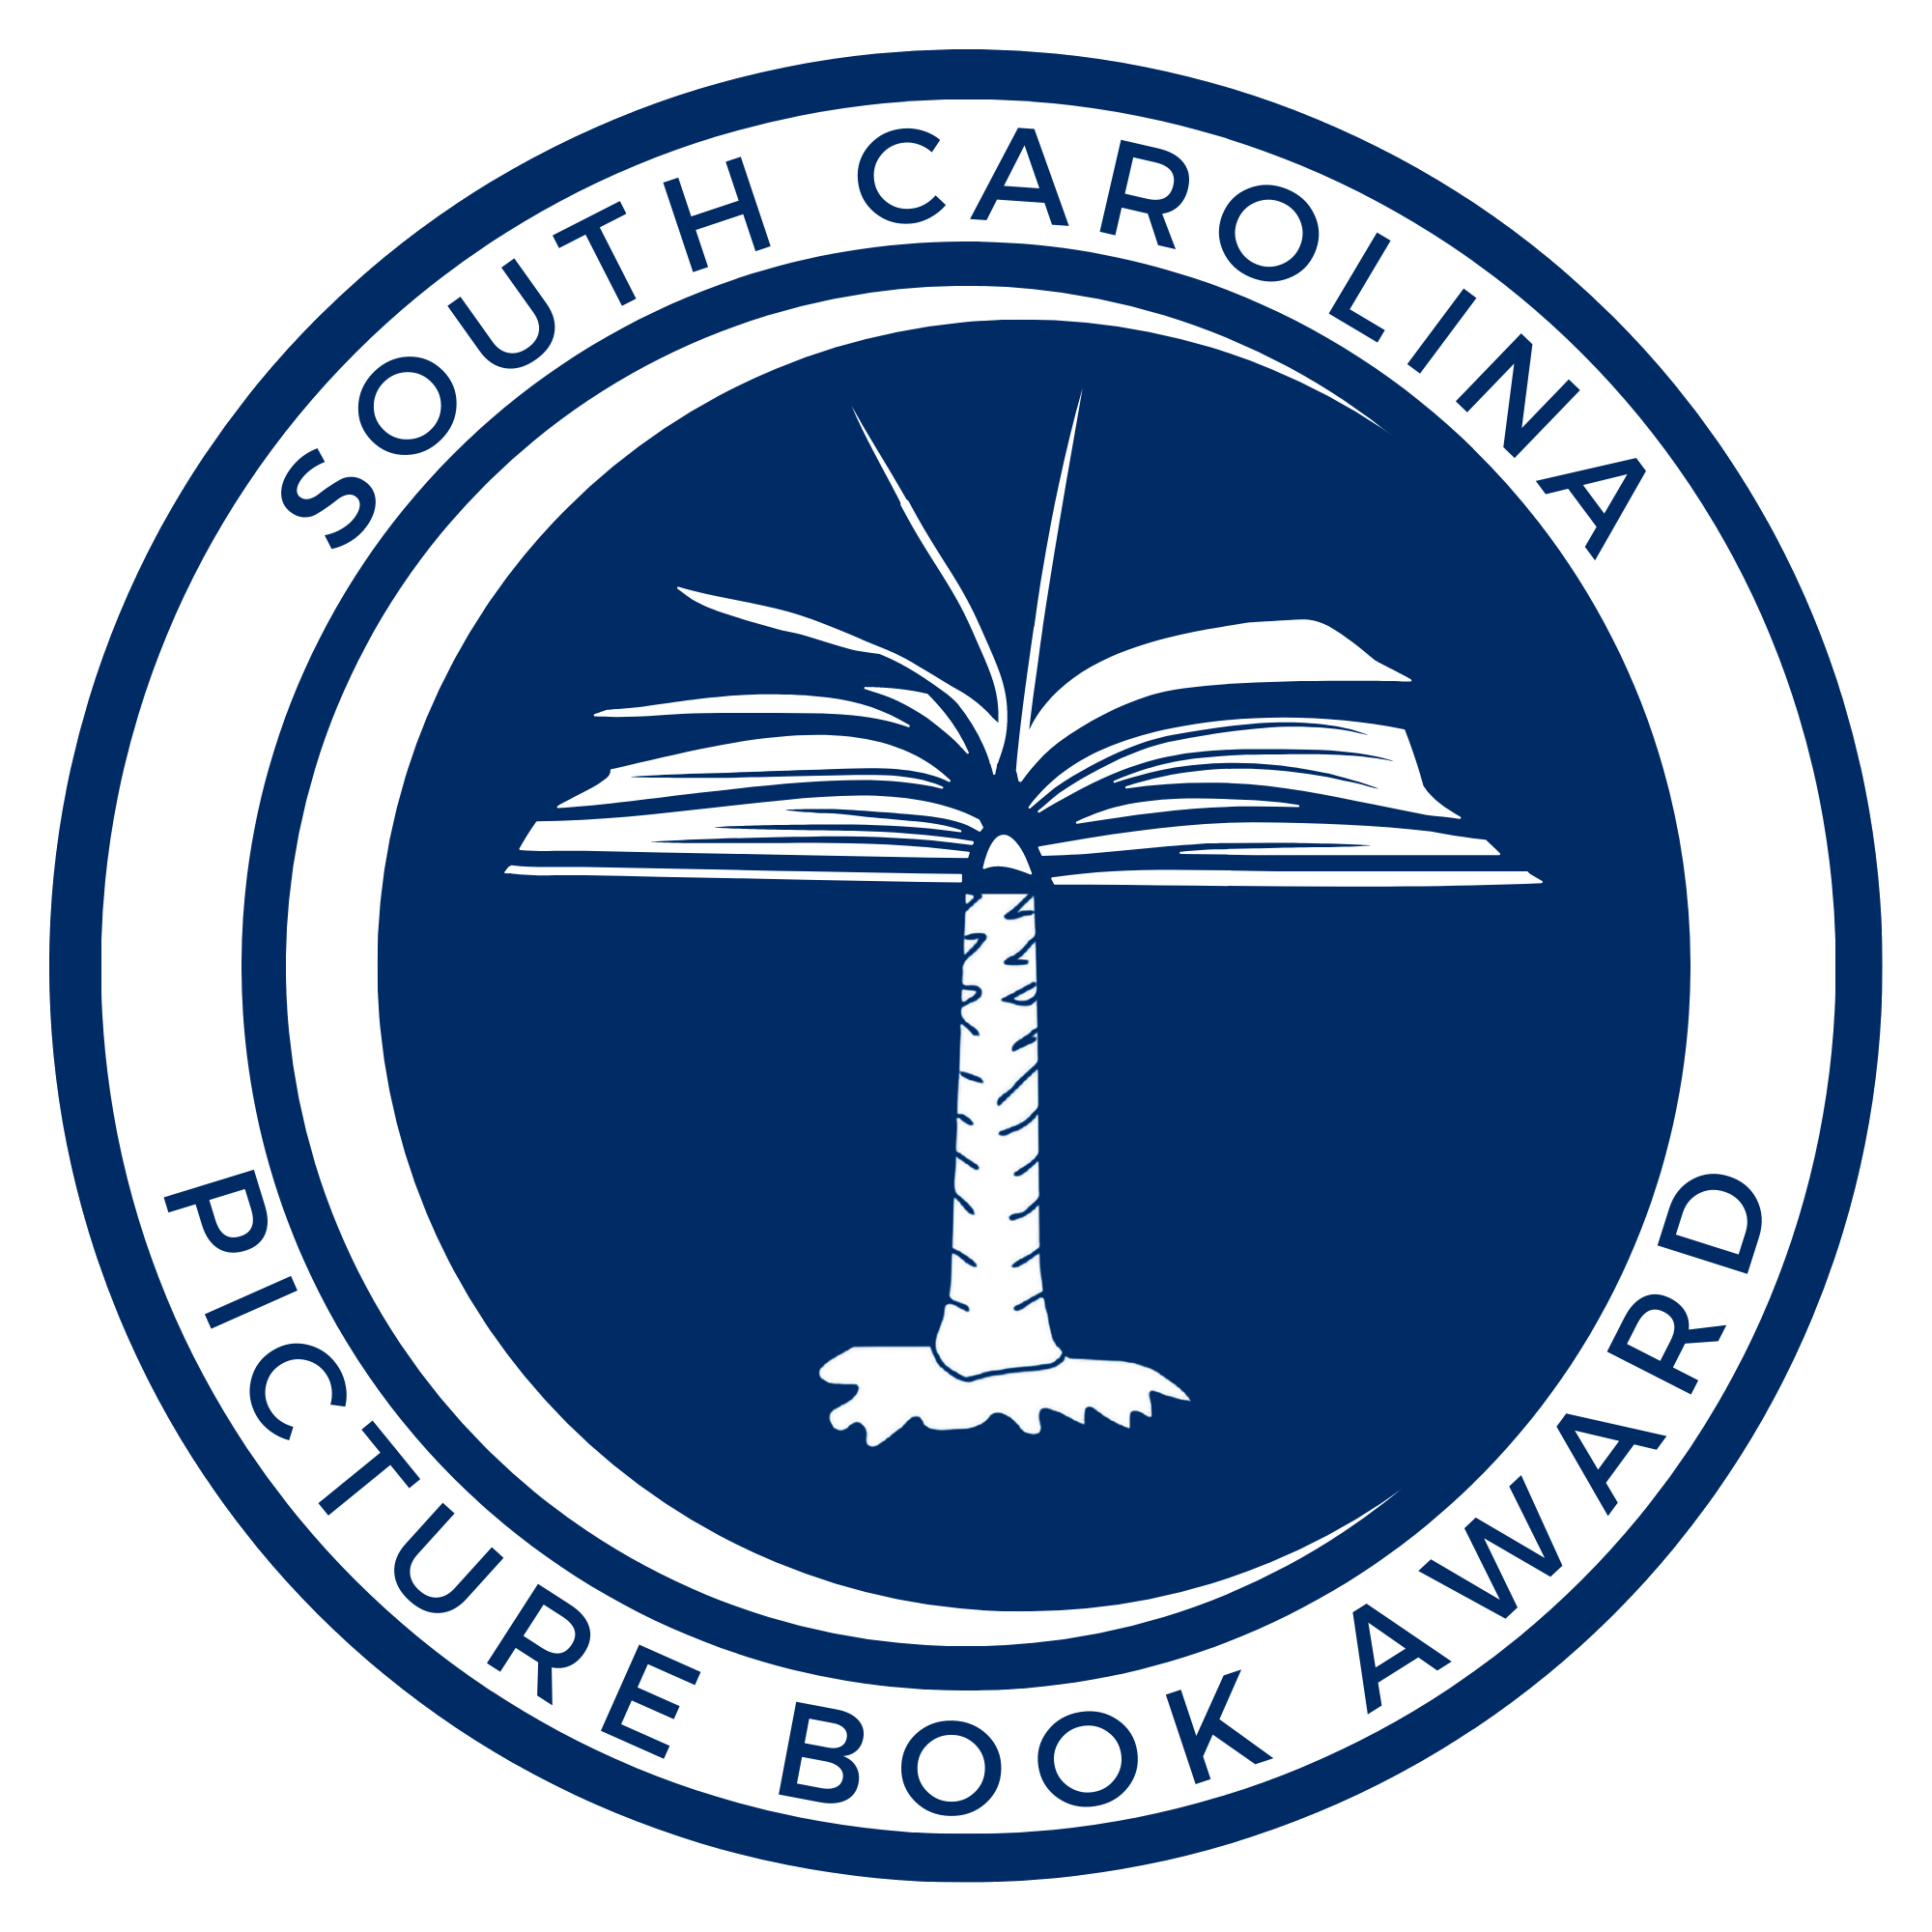 South Carolina Picture Book Award logo